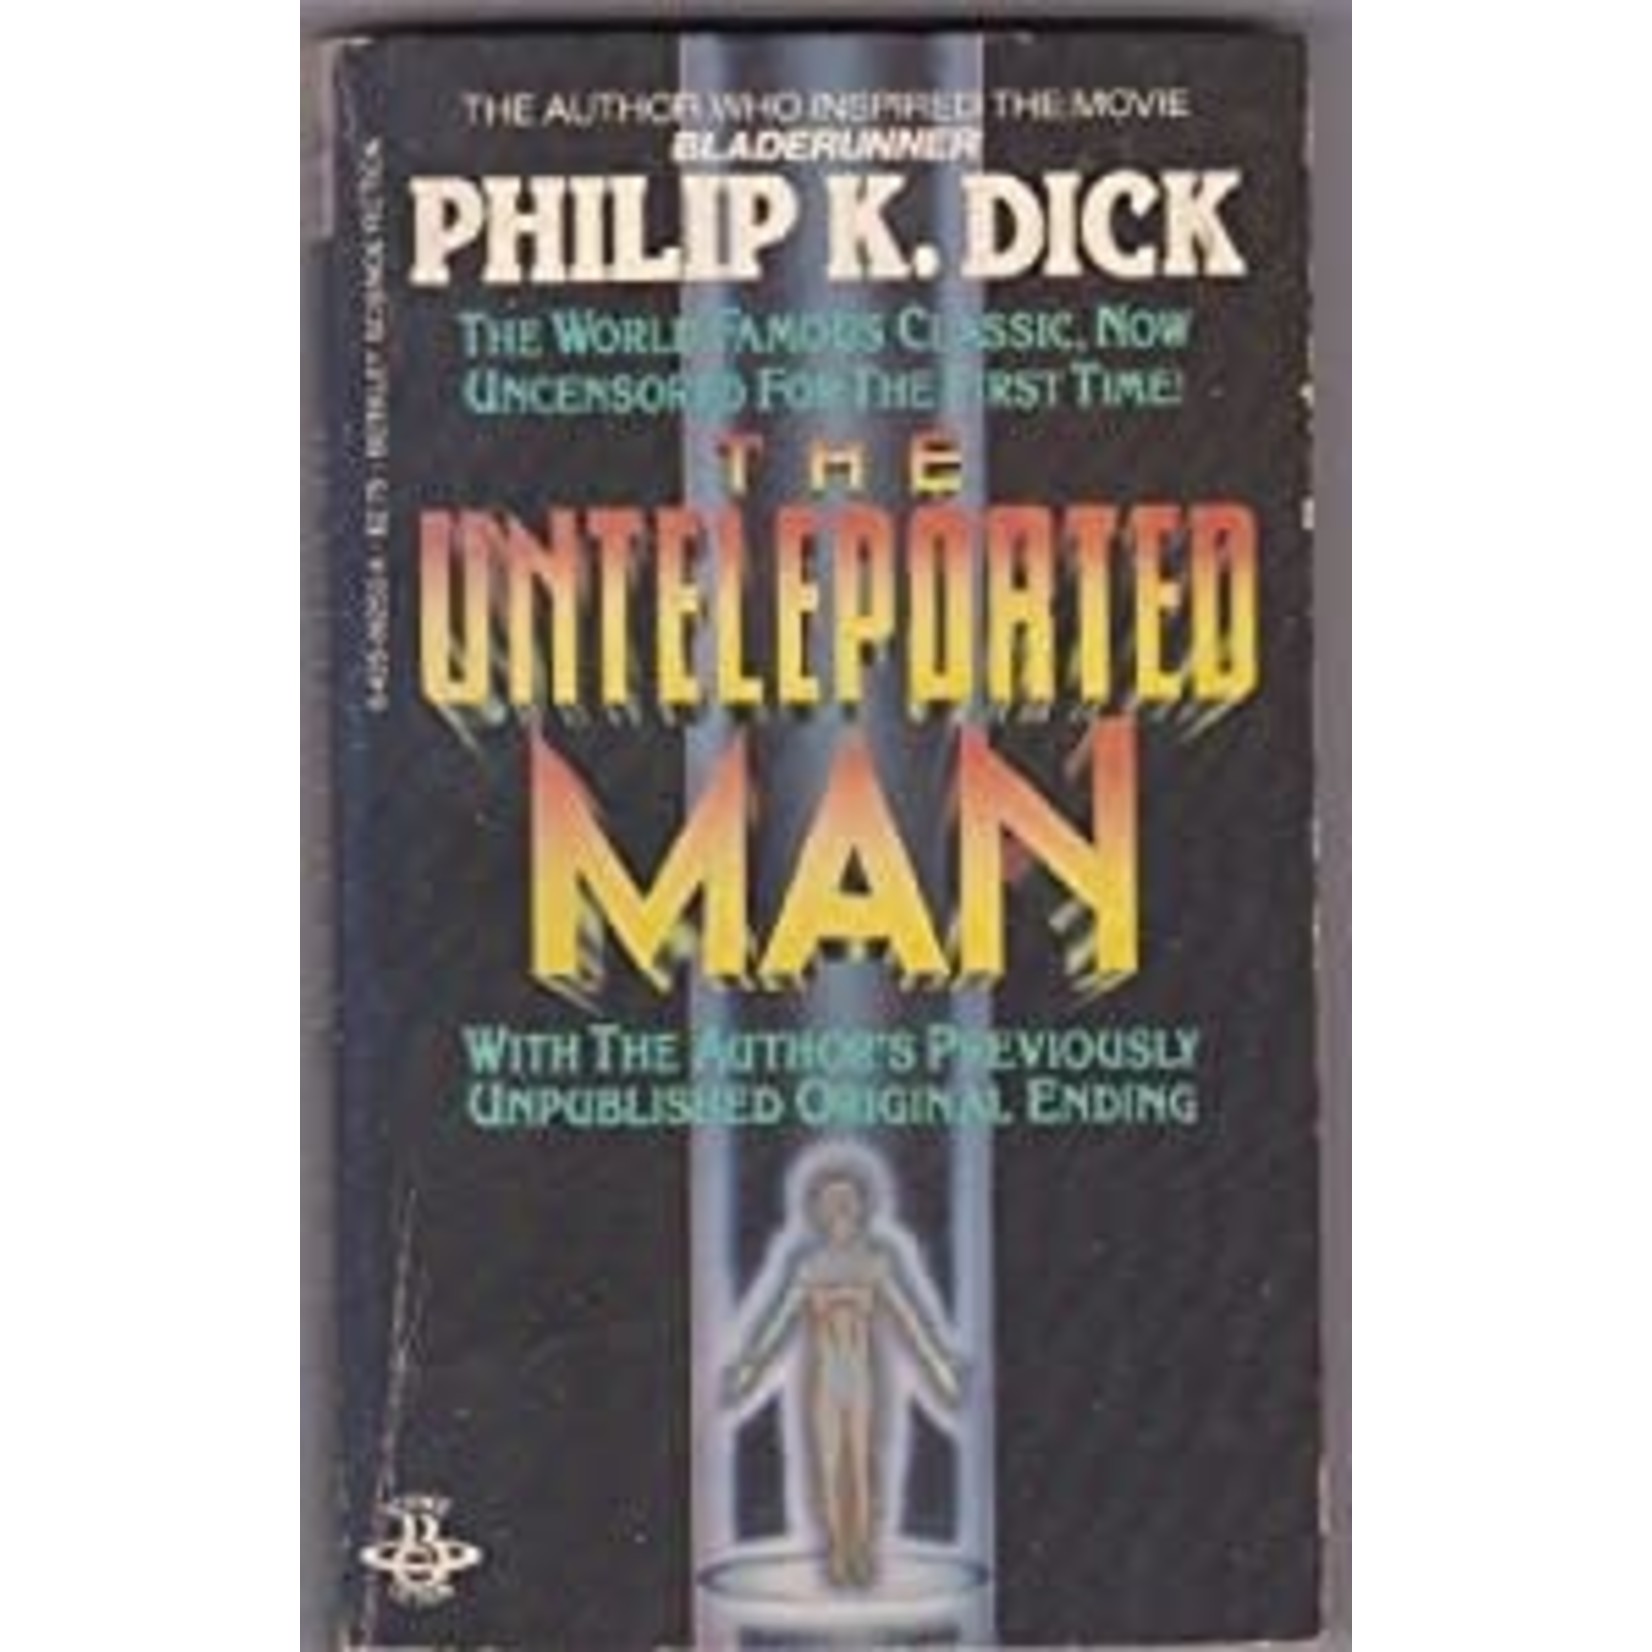 Dick, Philip K. Dick, Philip K. - The Unteleported Man